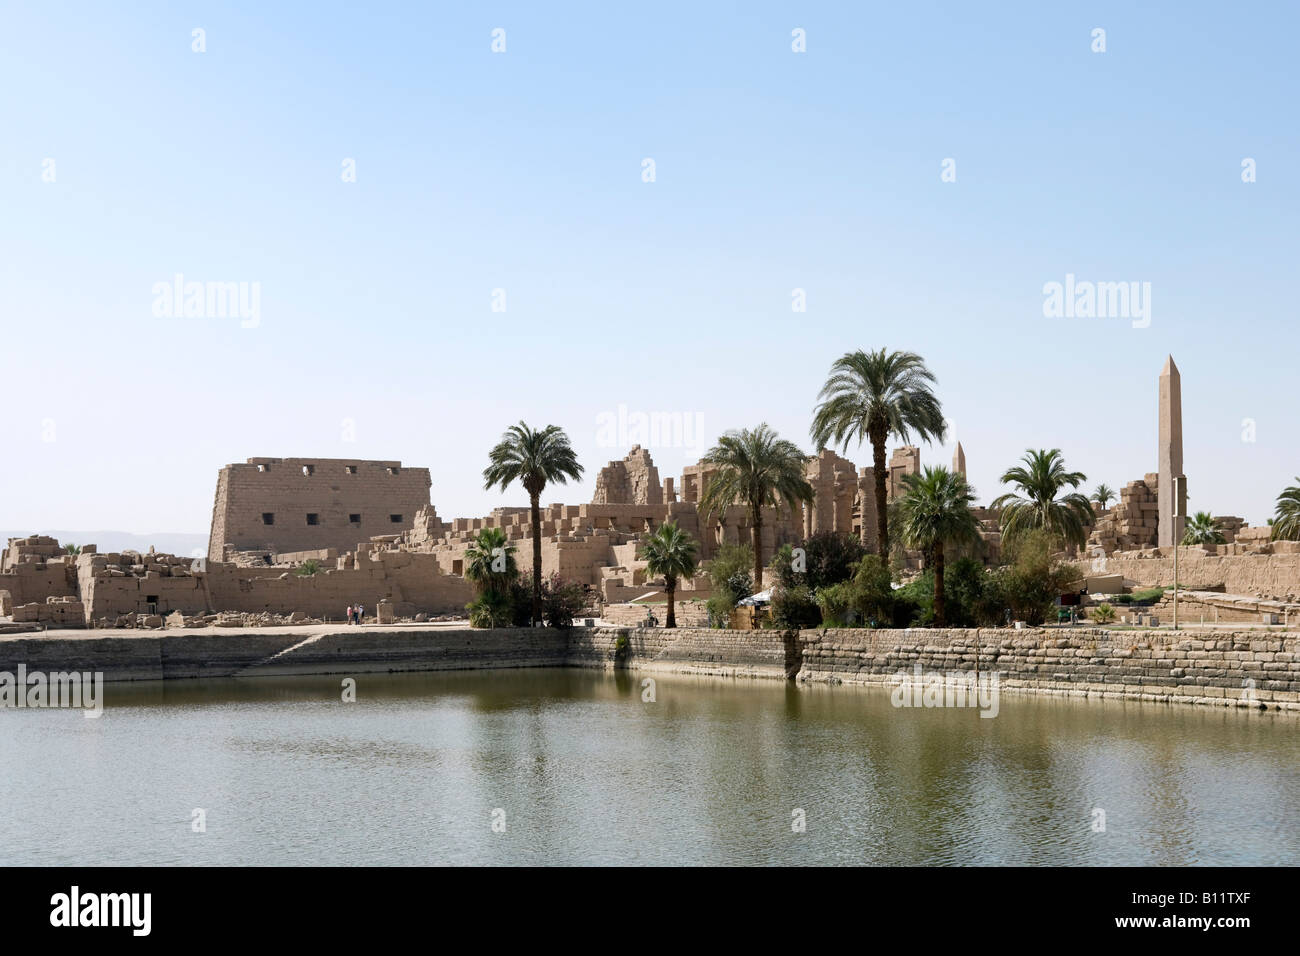 Precinct of Amun from across the Sacred Lake, Temple of Karnak, Luxor, Nile Valley, Egypt Stock Photo